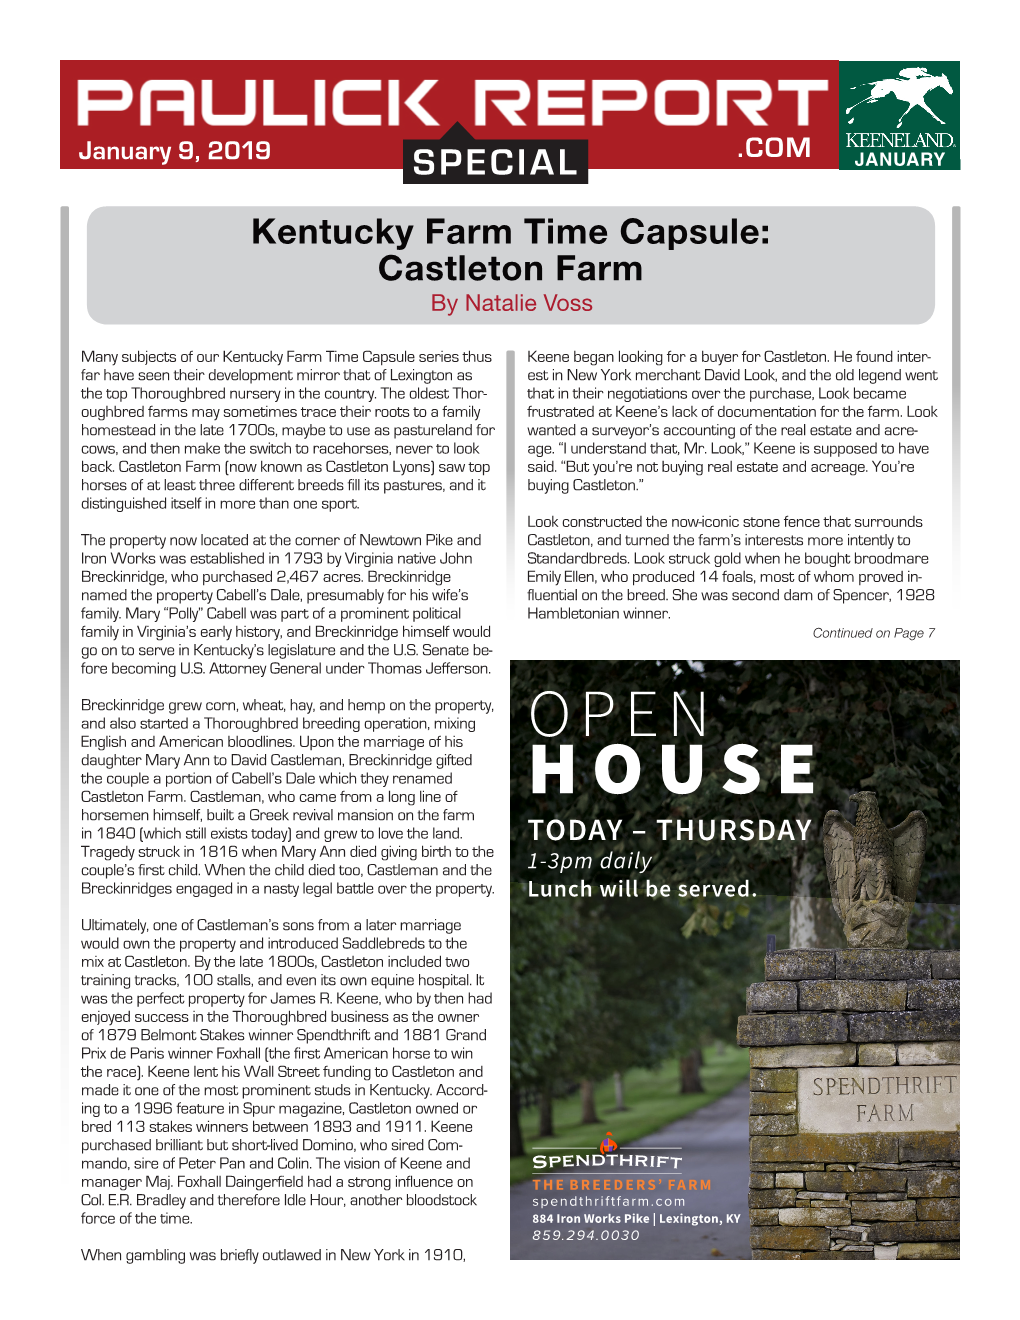 SPECIAL JANUARY Kentucky Farm Time Capsule: Castleton Farm by Natalie Voss